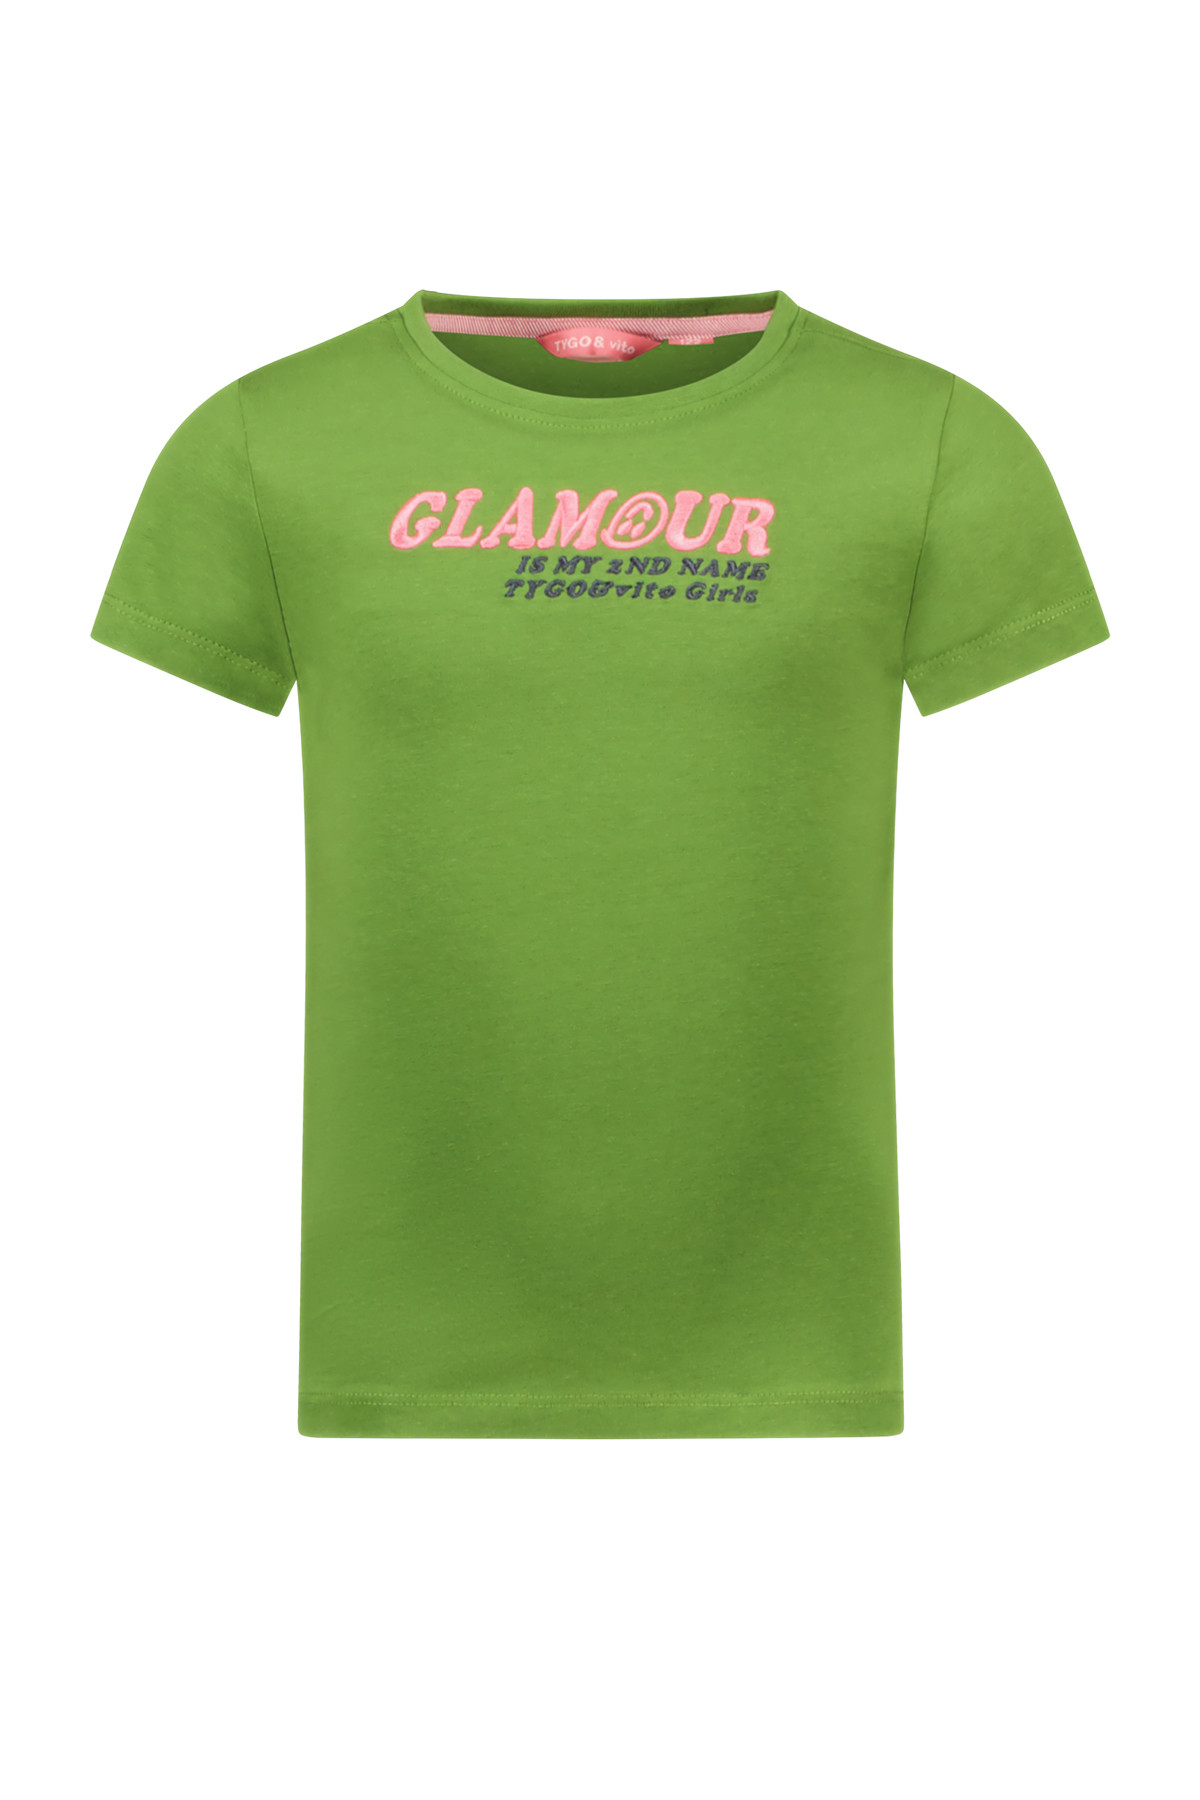 T-shirt Glamour - Boutique Toup'tibou - photo 6